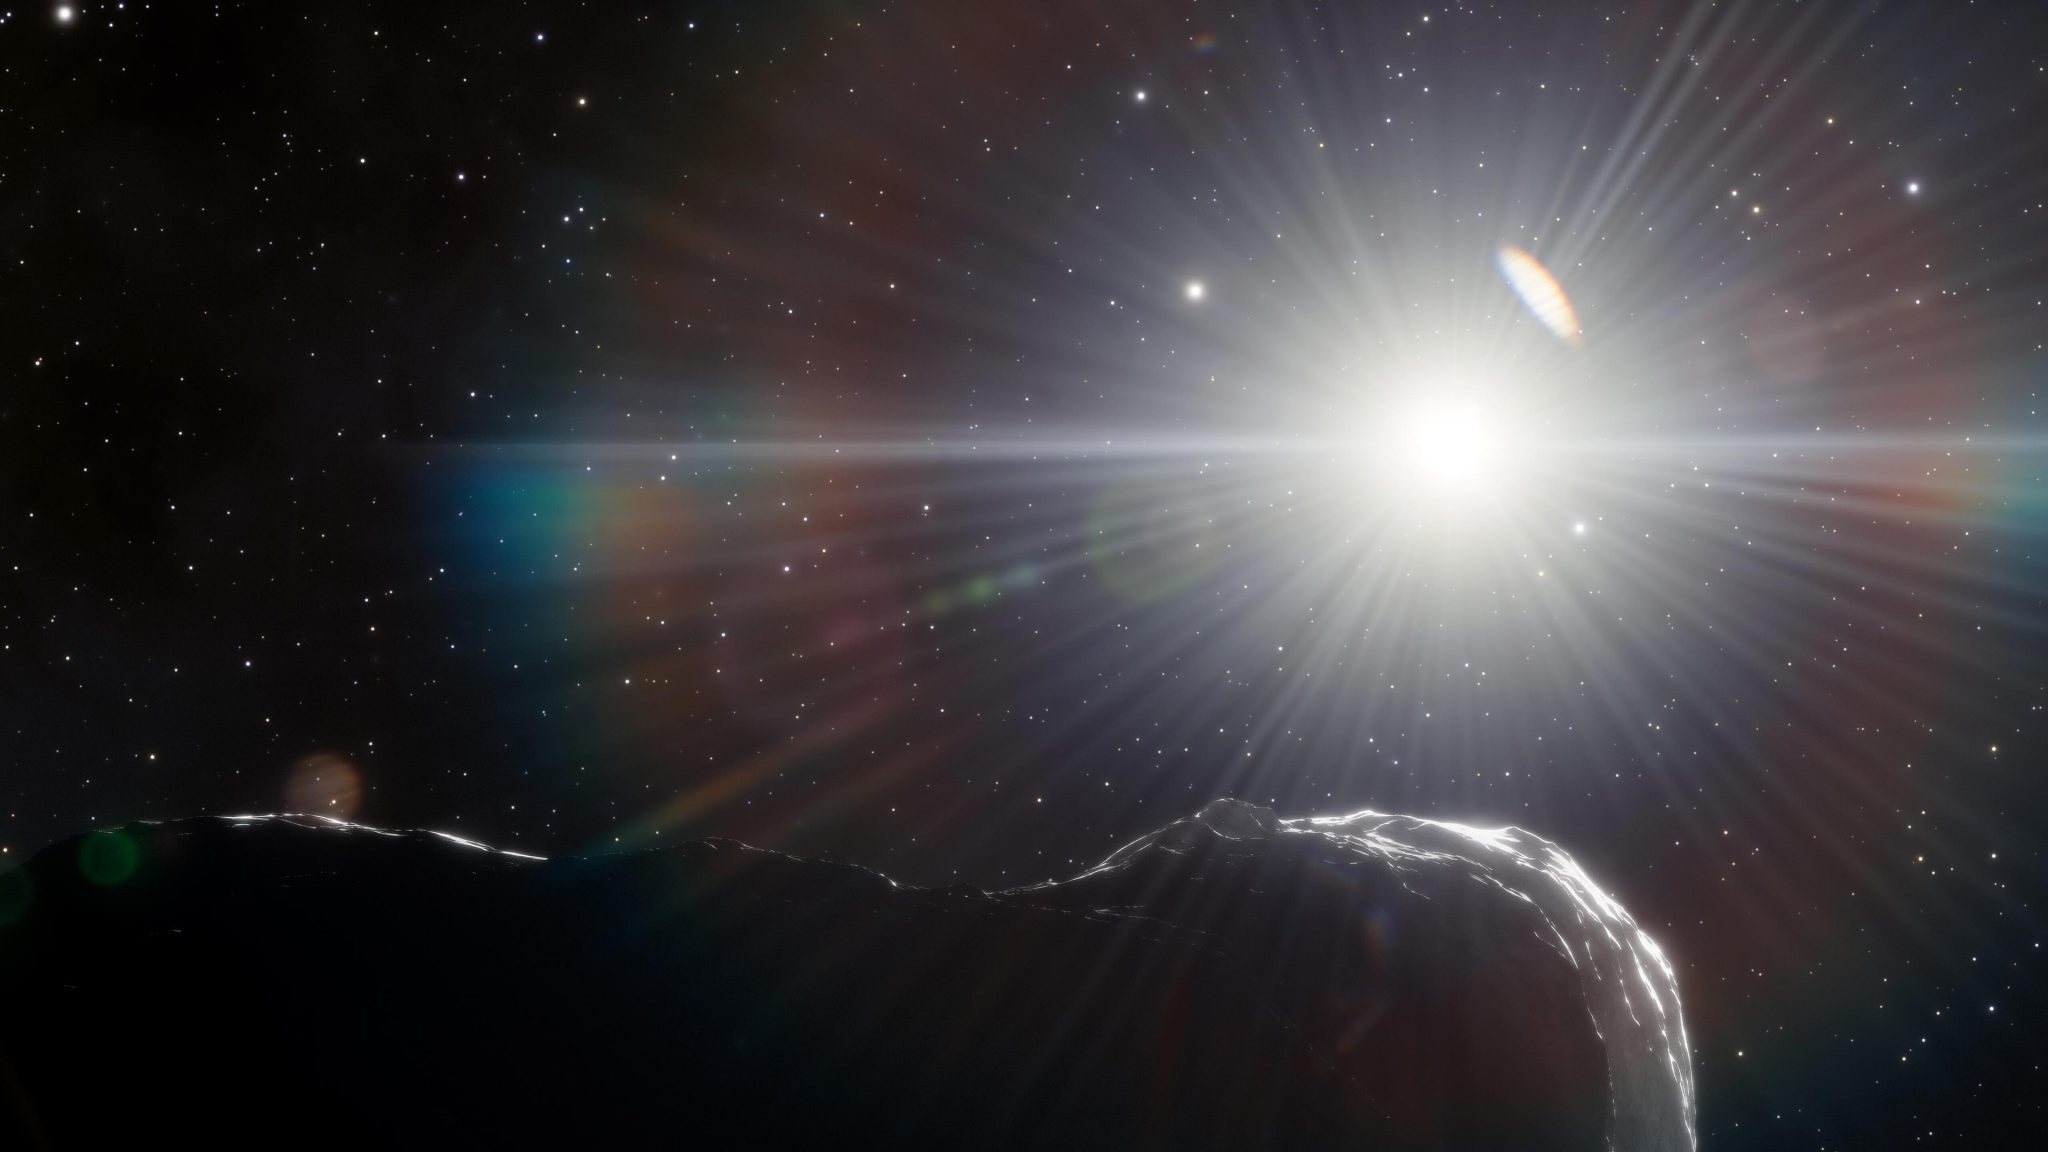 Asteroid orbits closer to the sun than Earth's orbit